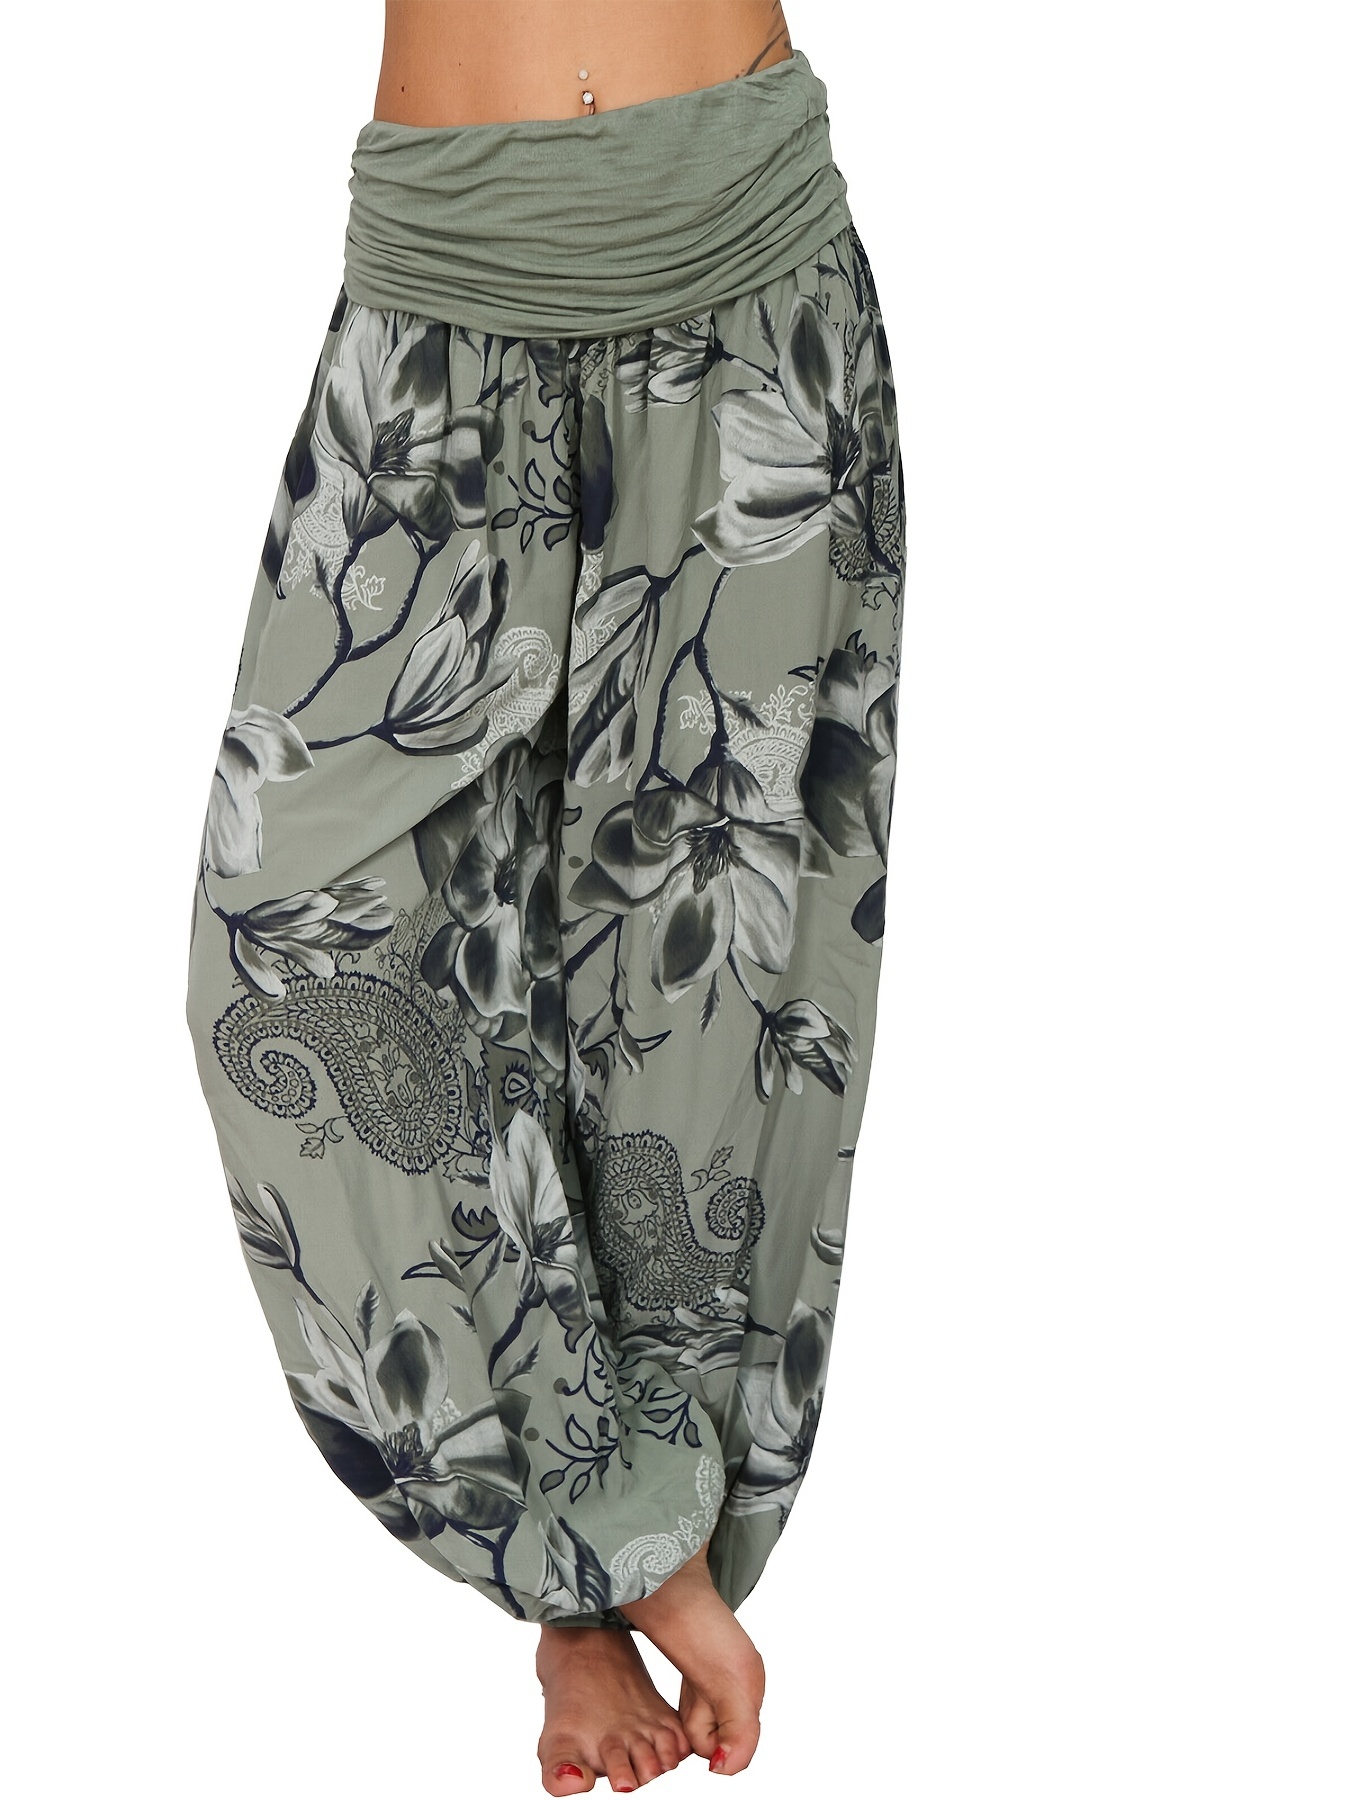 Women's Pants High Waist, Sarouel Ample Floral Pattern, Elastic